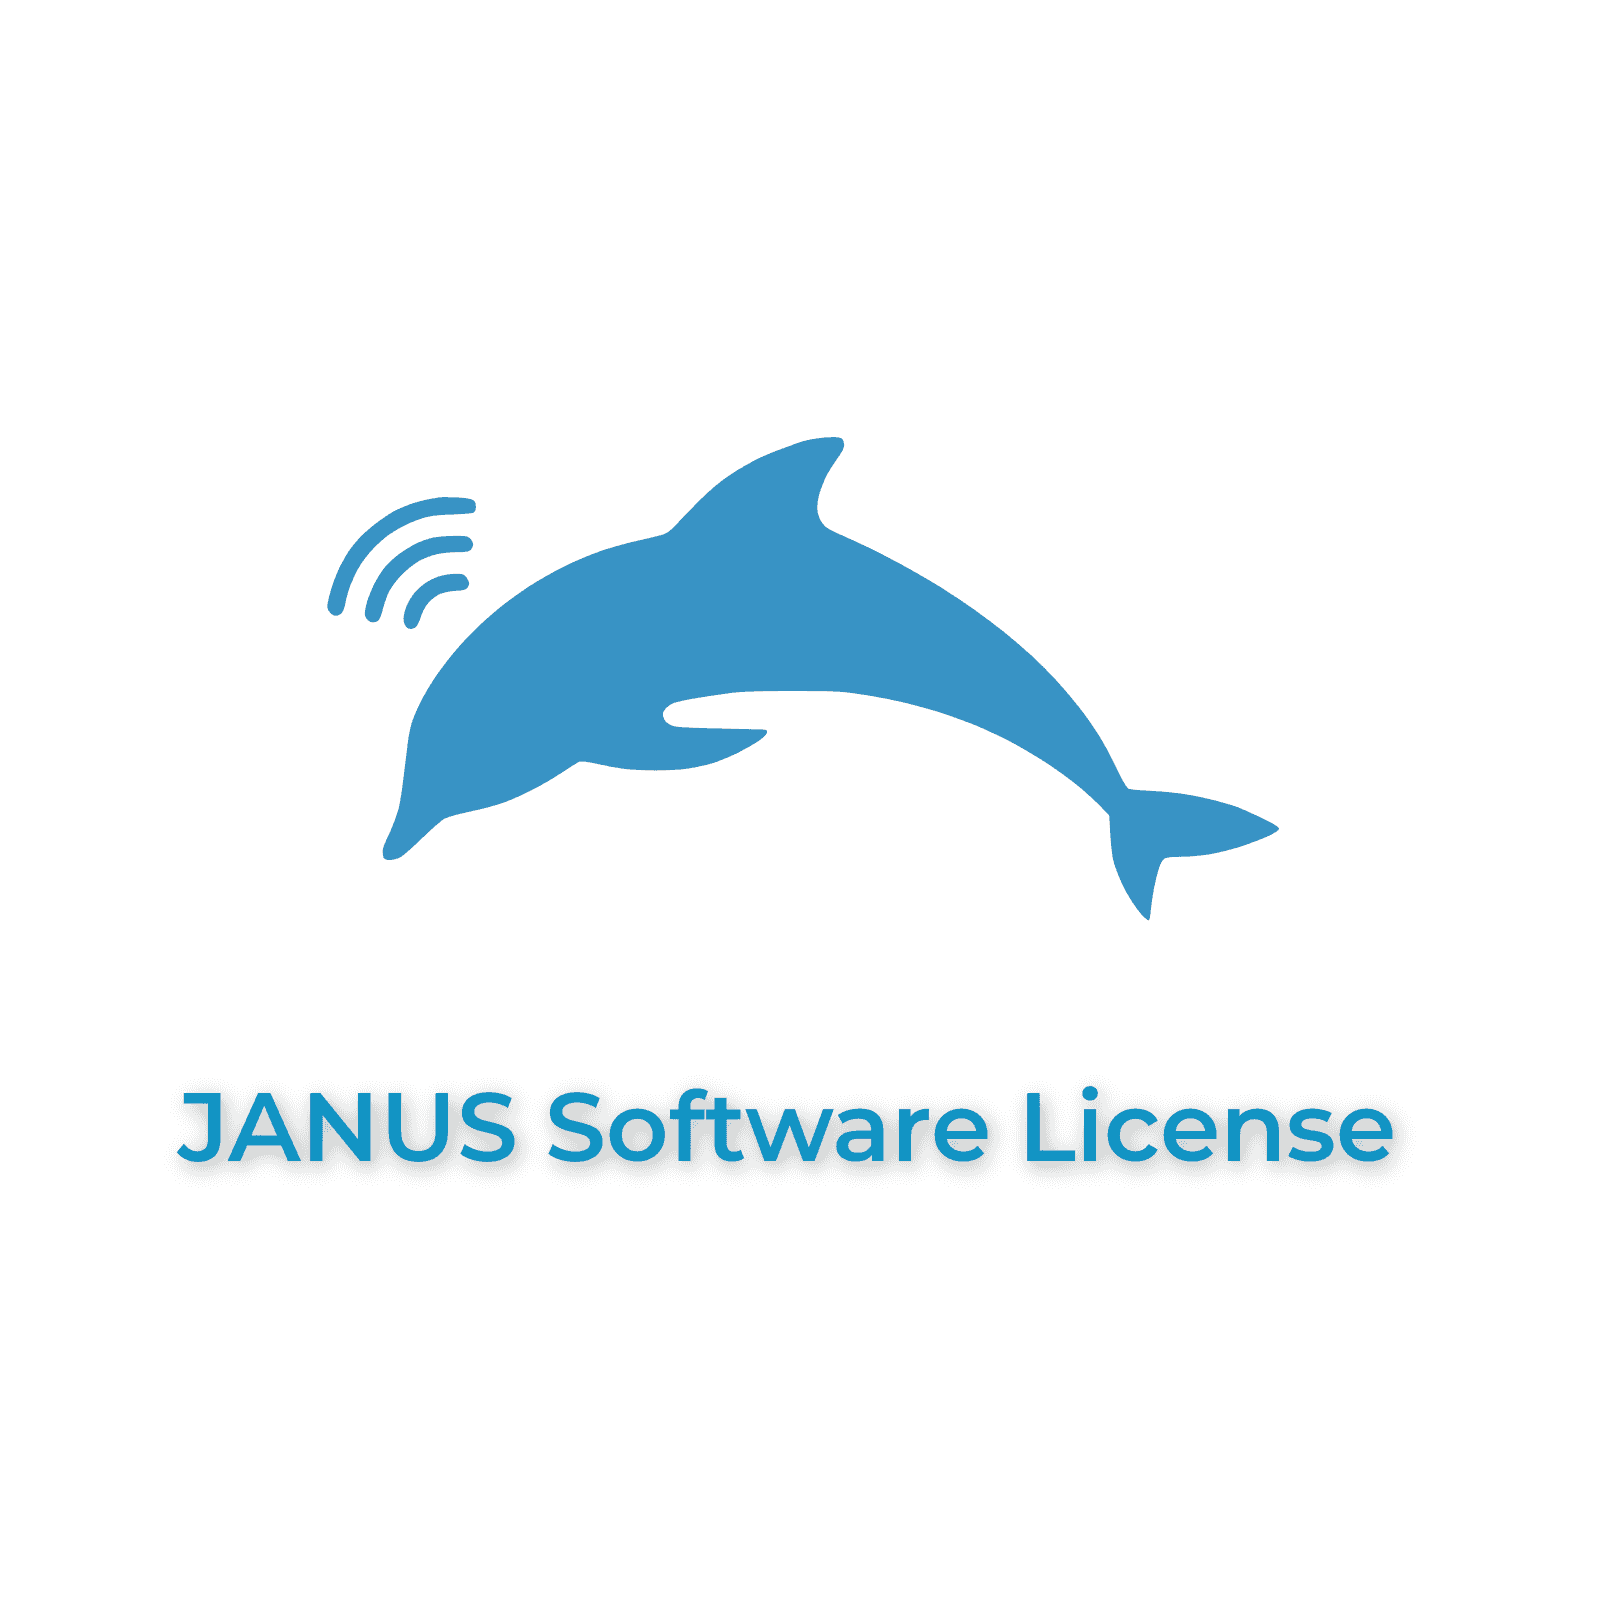 Image of JANUS Software License